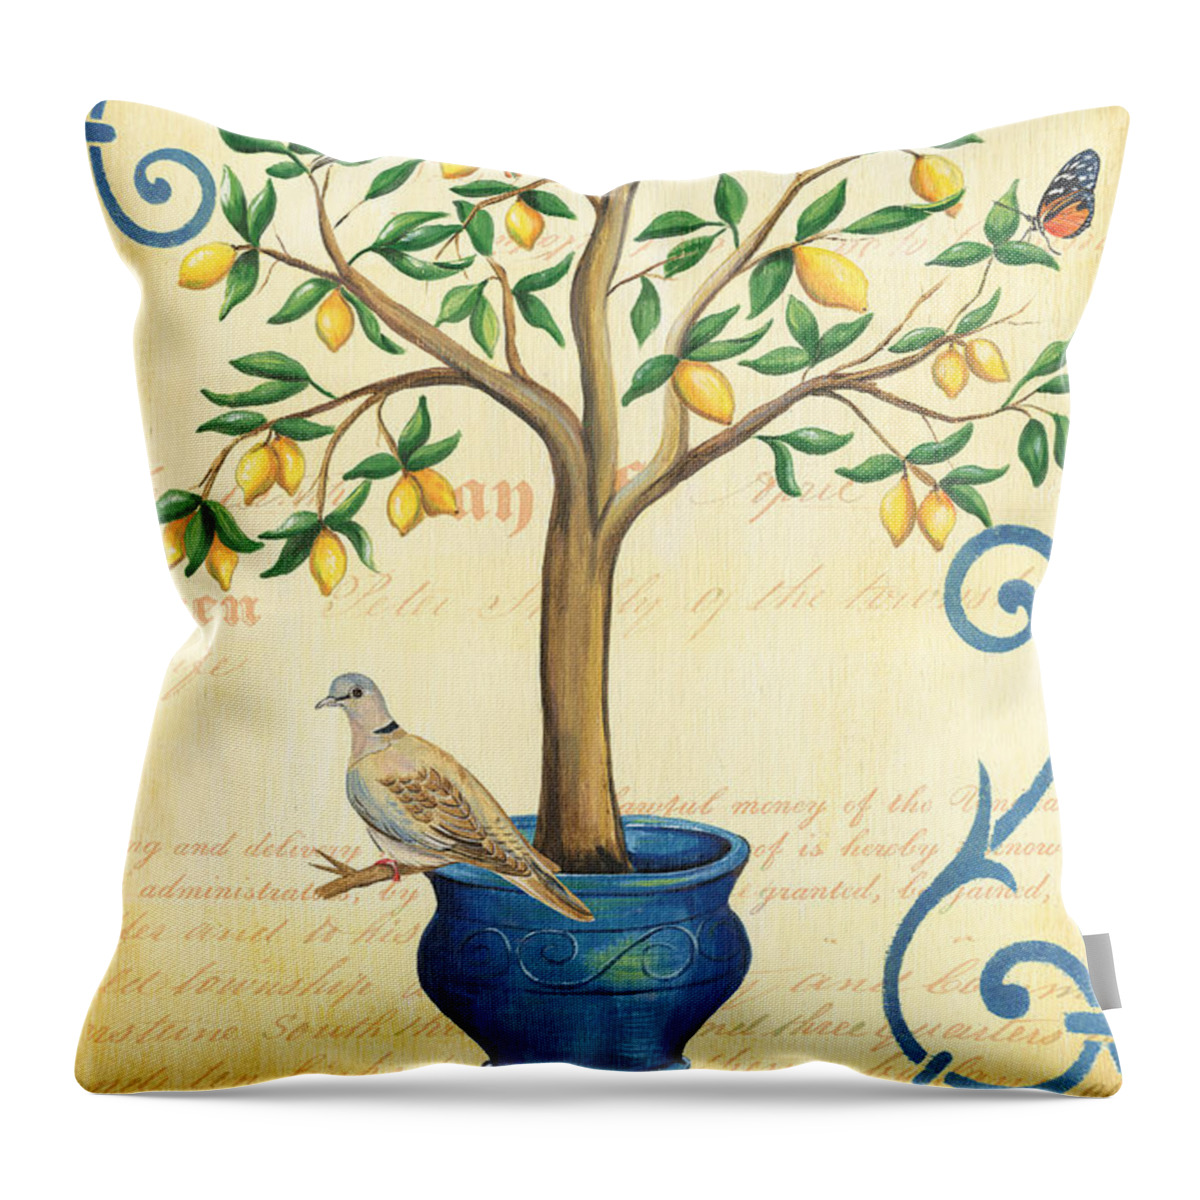 Lemon Throw Pillow featuring the painting Lemon Tree of Life by Debbie DeWitt